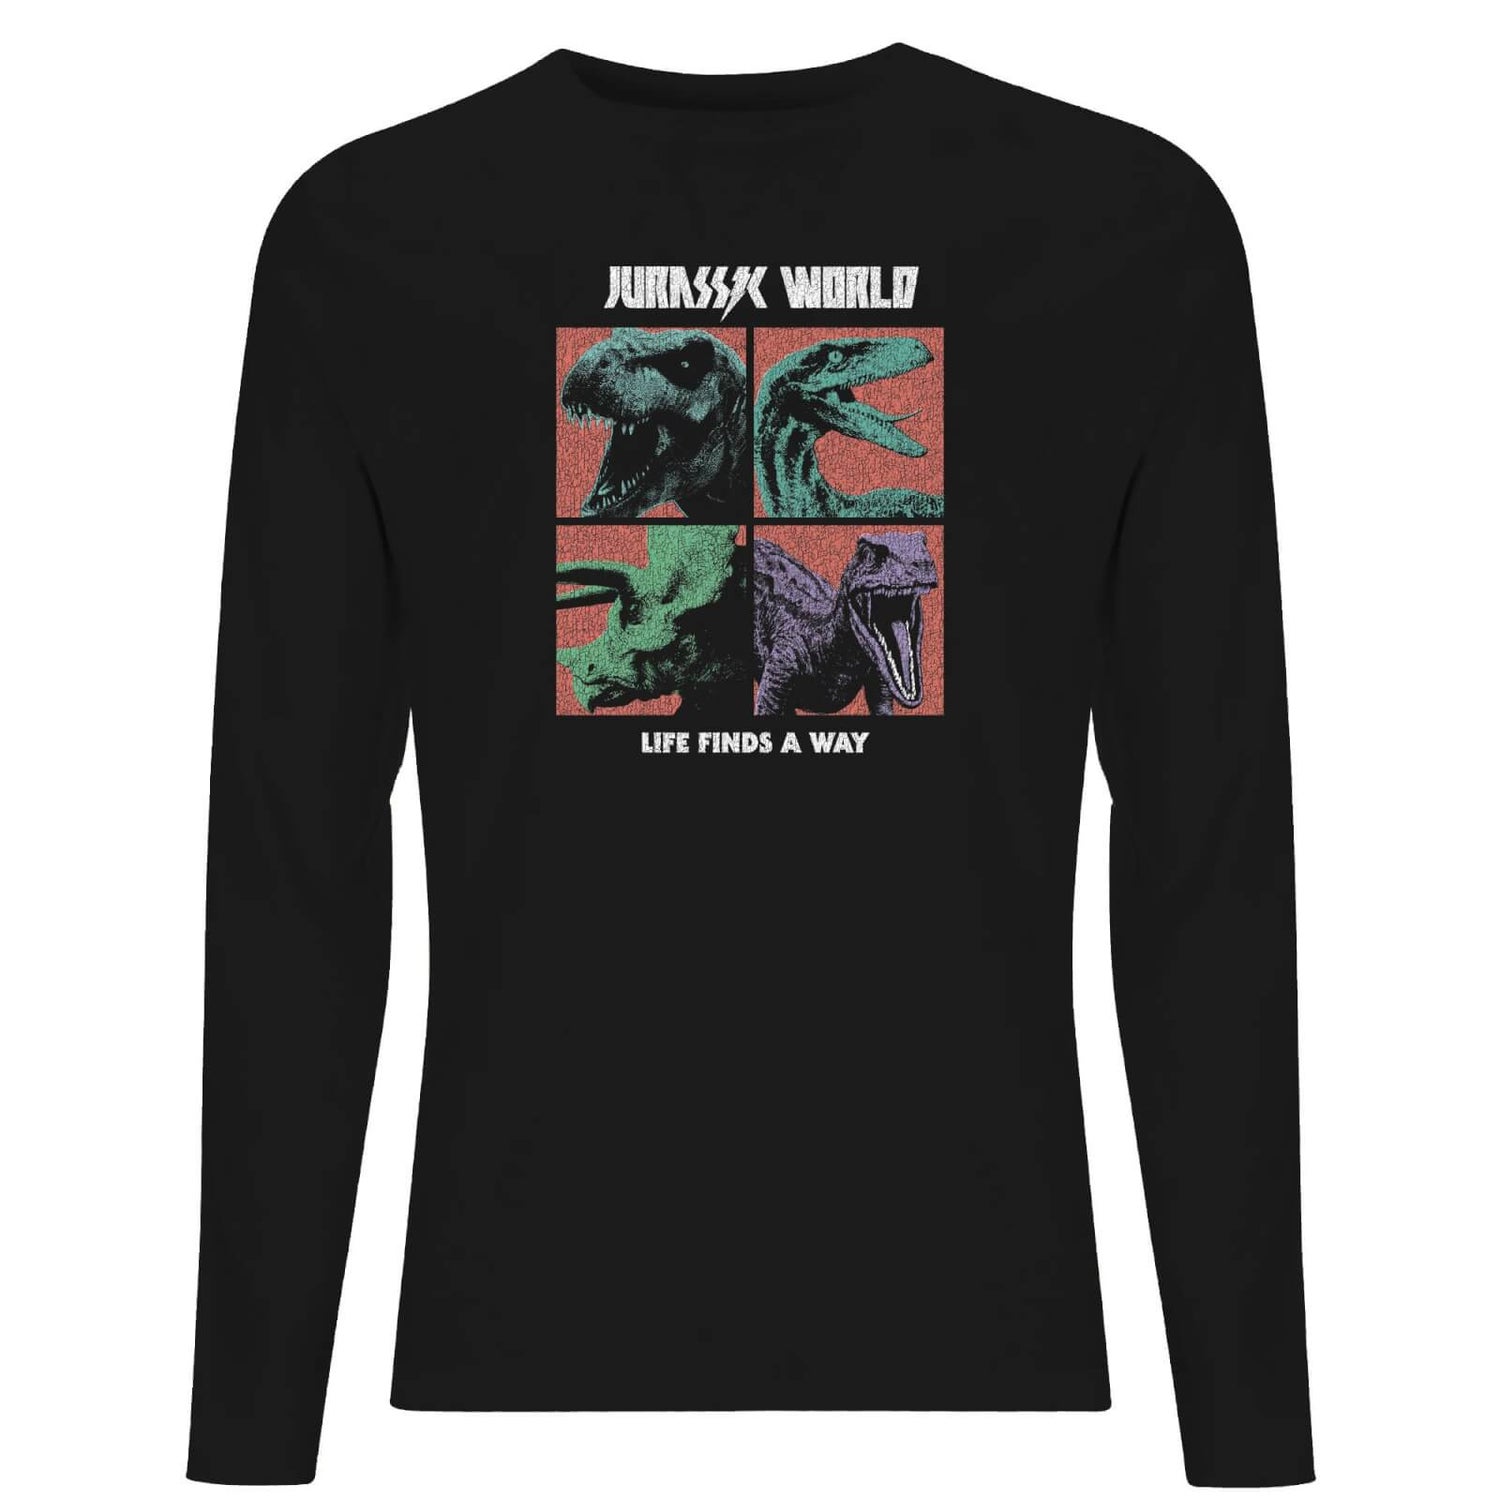 Jurassic Park World Four Colour Faces Men's Long Sleeve T-Shirt - Black